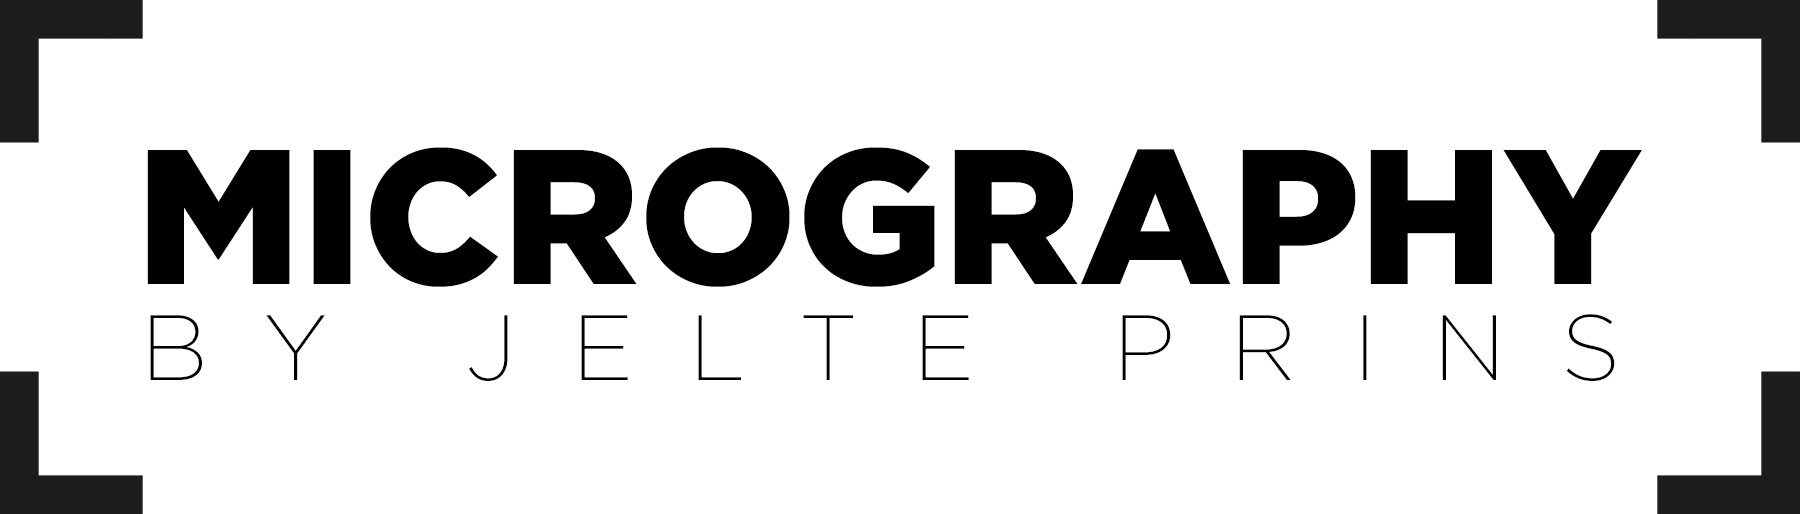 logo micrography